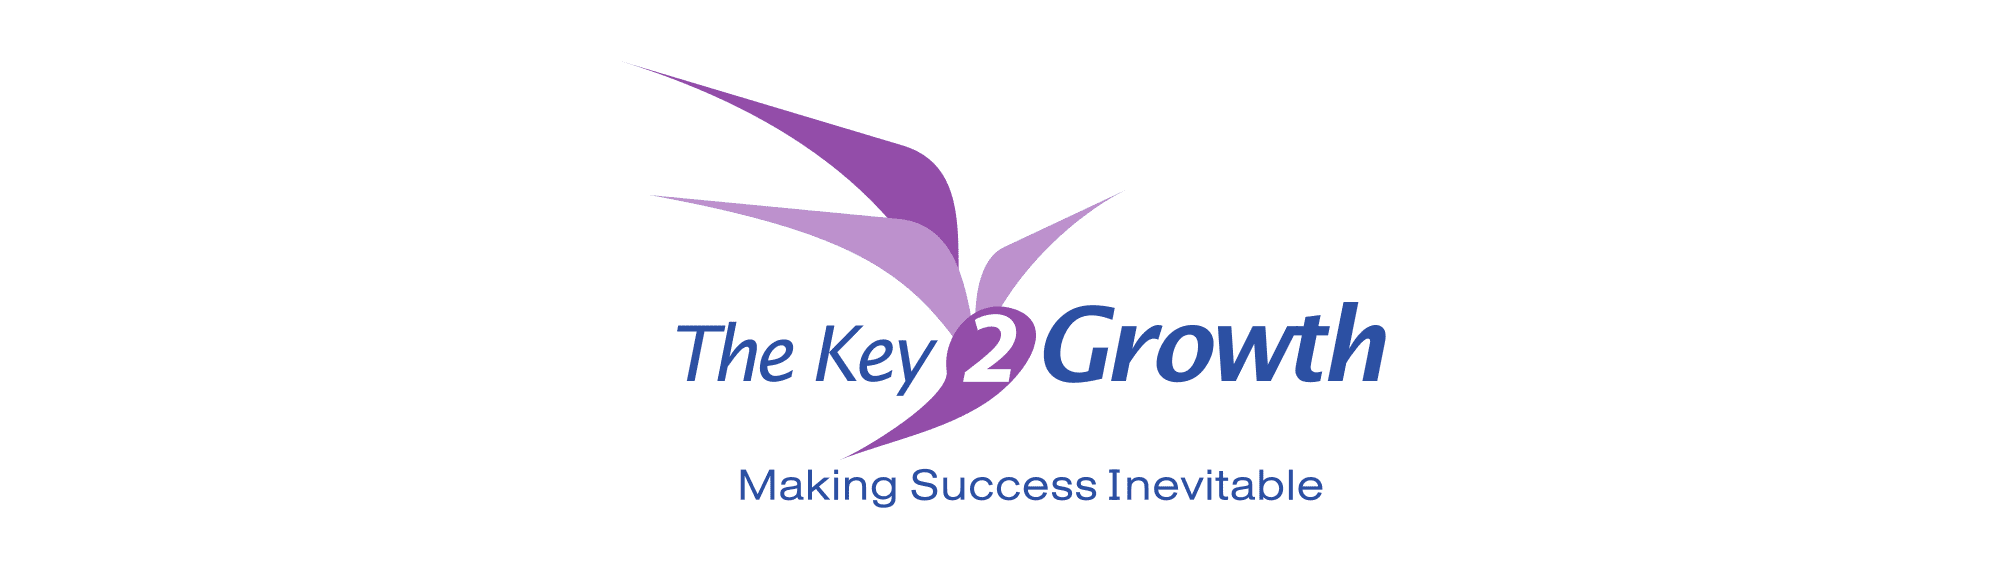 The Key 2 Growth